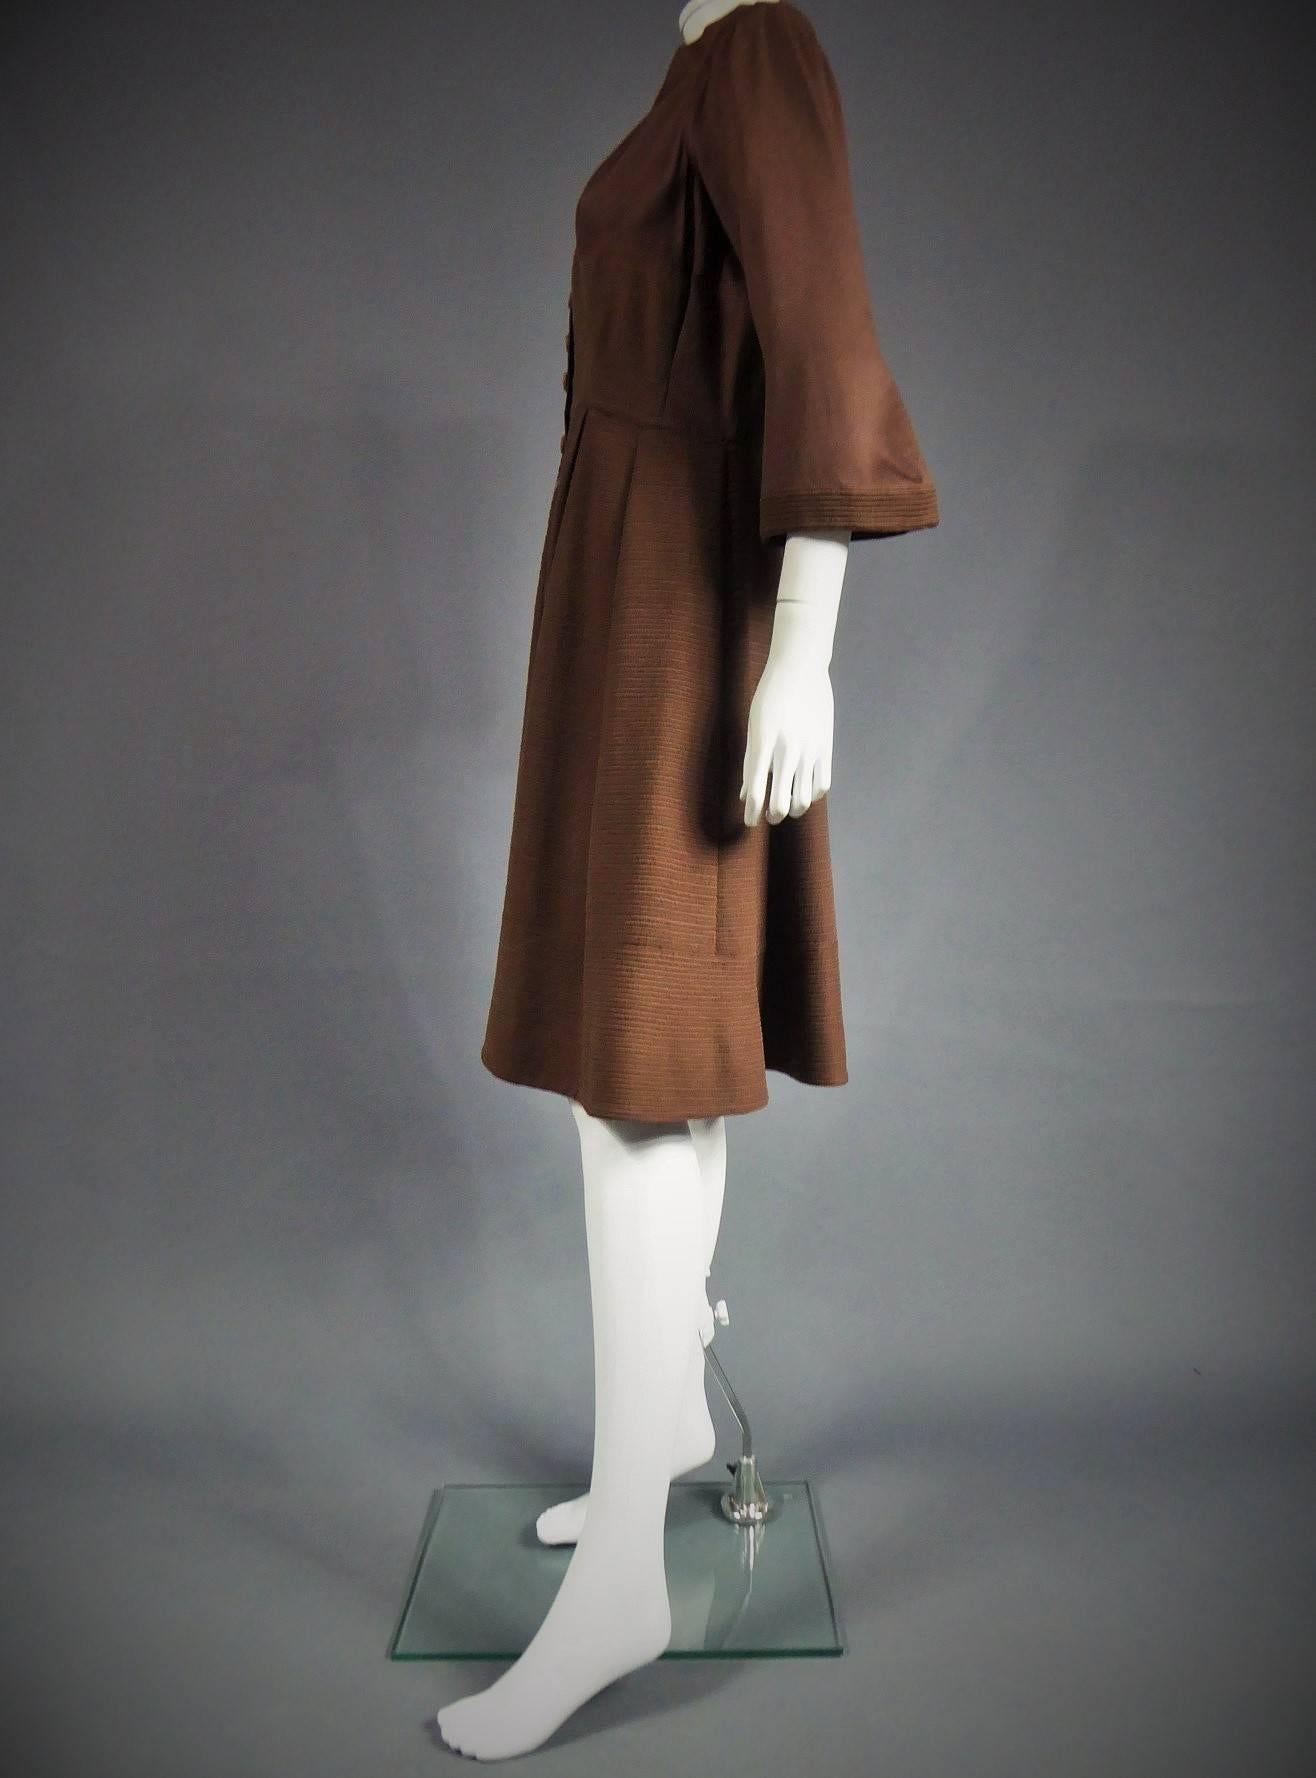 Black Carven Haute Couture Coat Dress, Circa 1944 / 1947